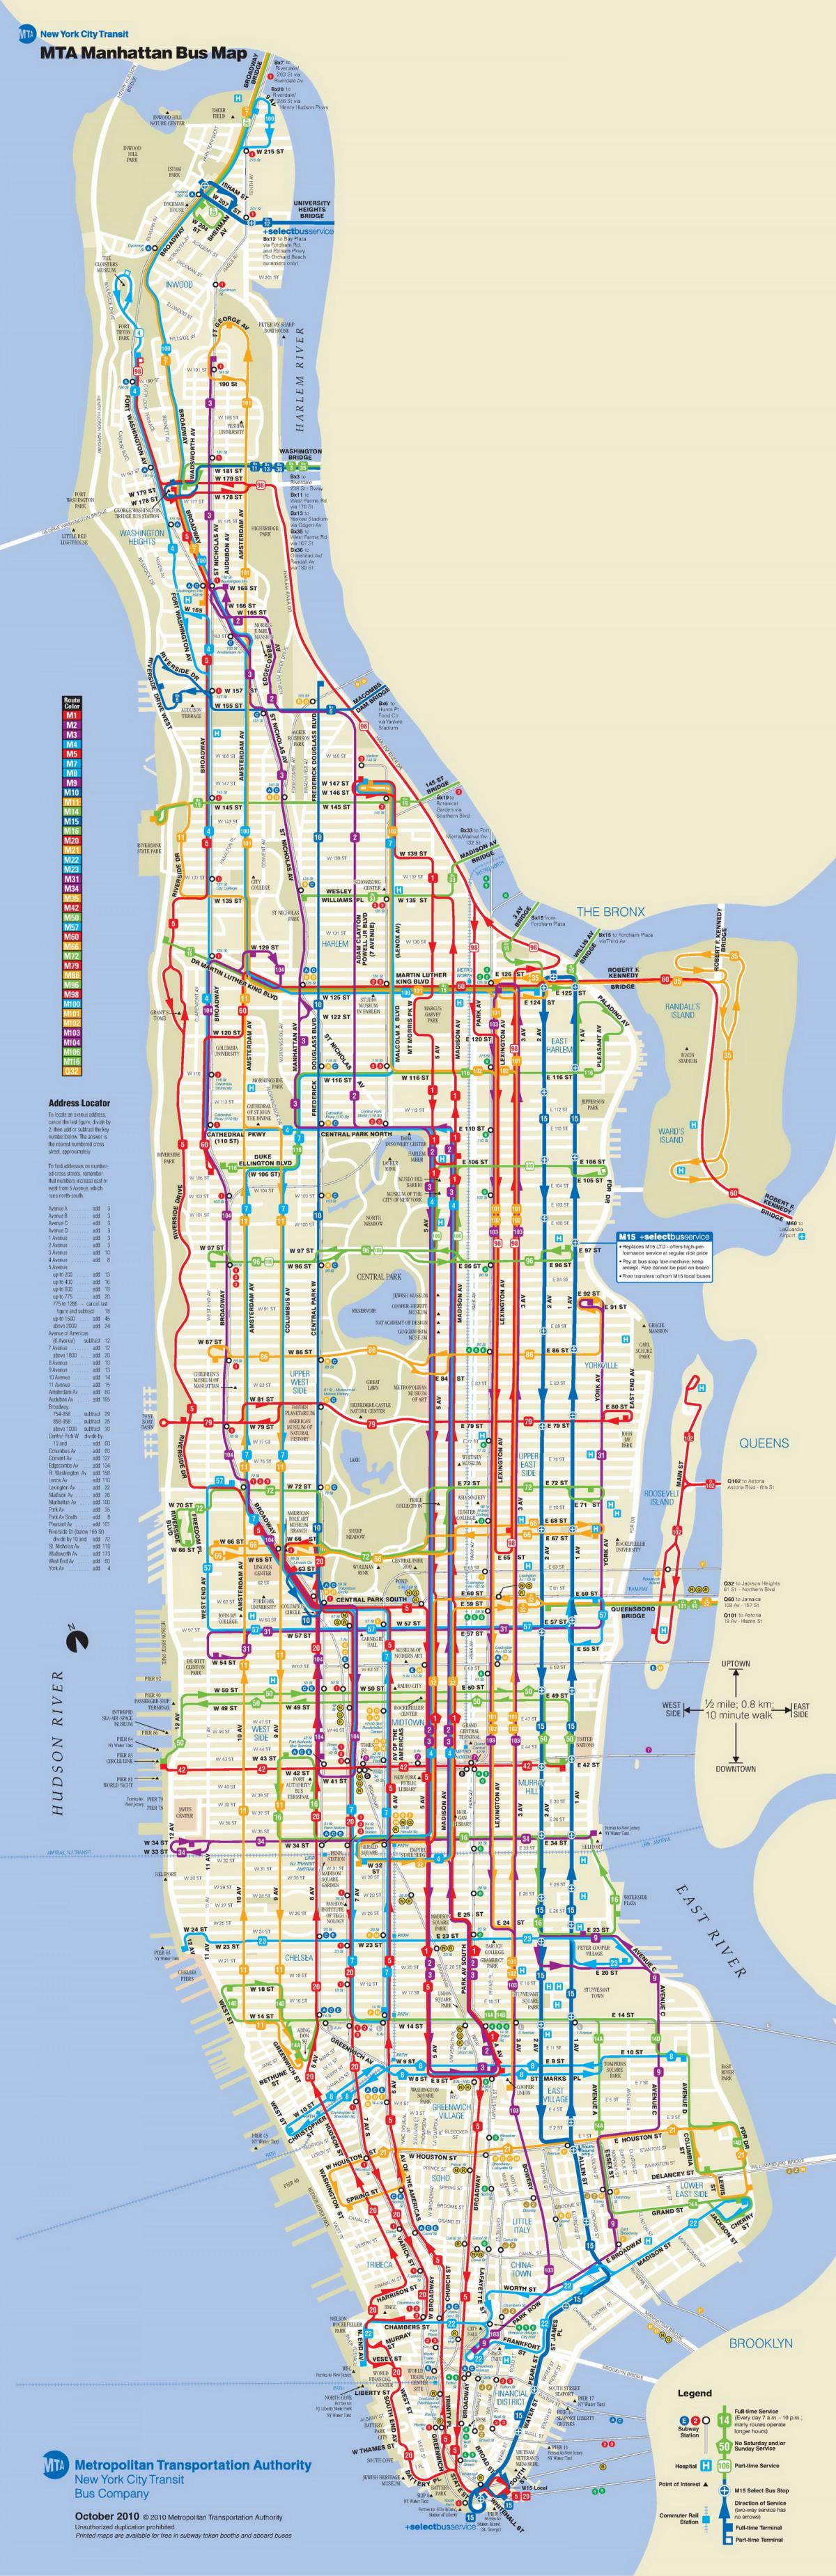 NYC bus χάρτη του Μανχάταν